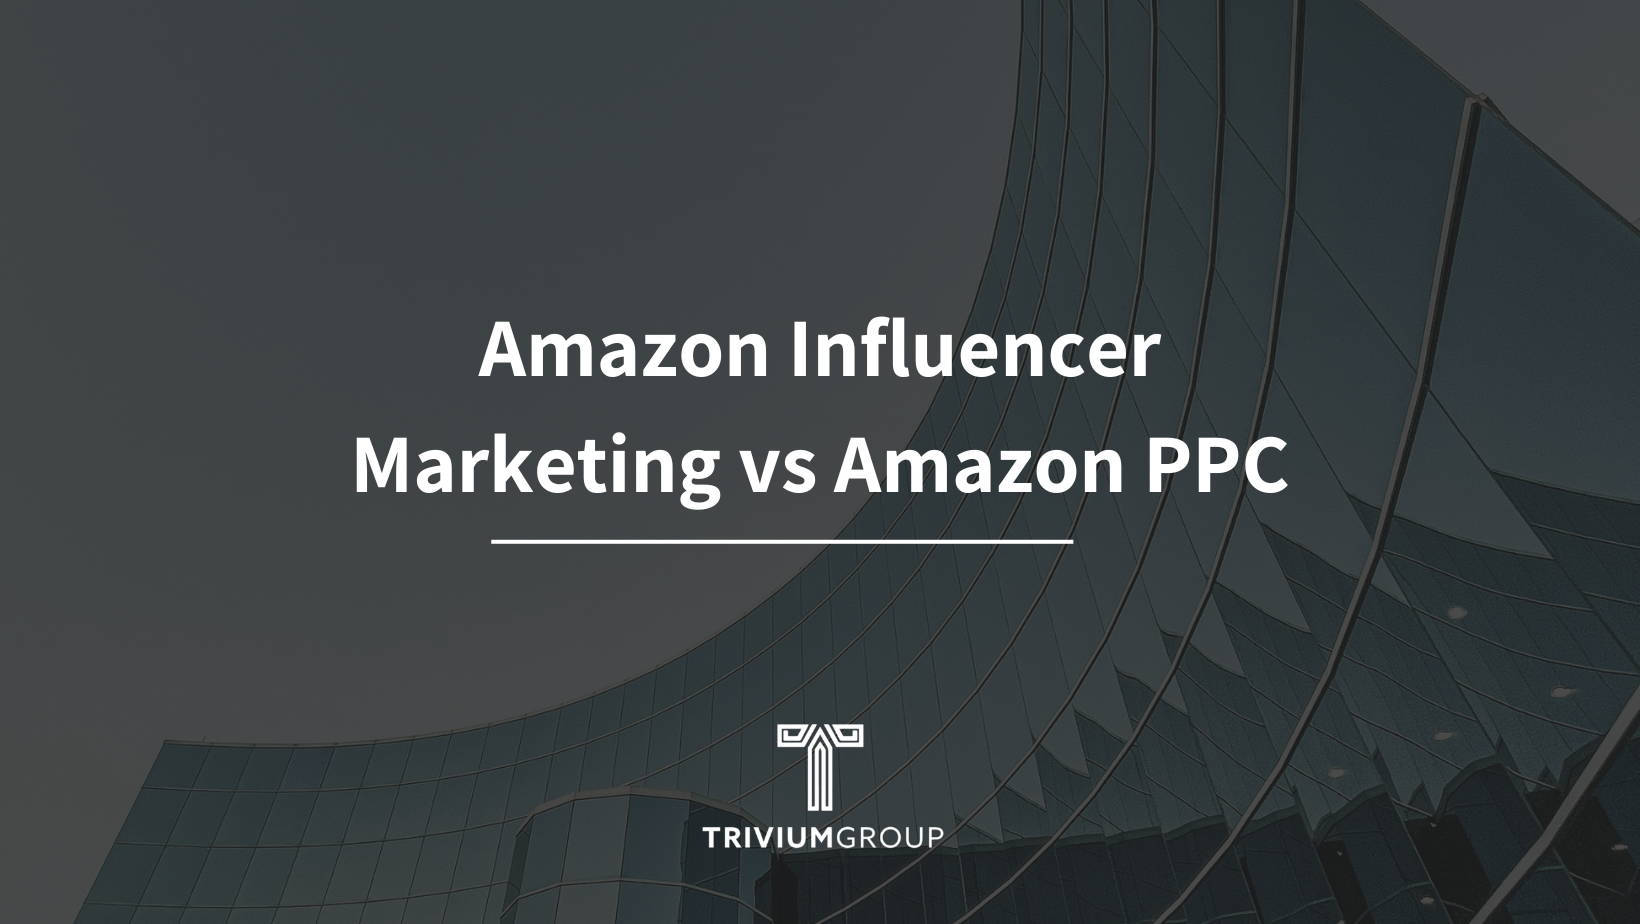 Amazon Influencer Marketing vs Amazon PPC